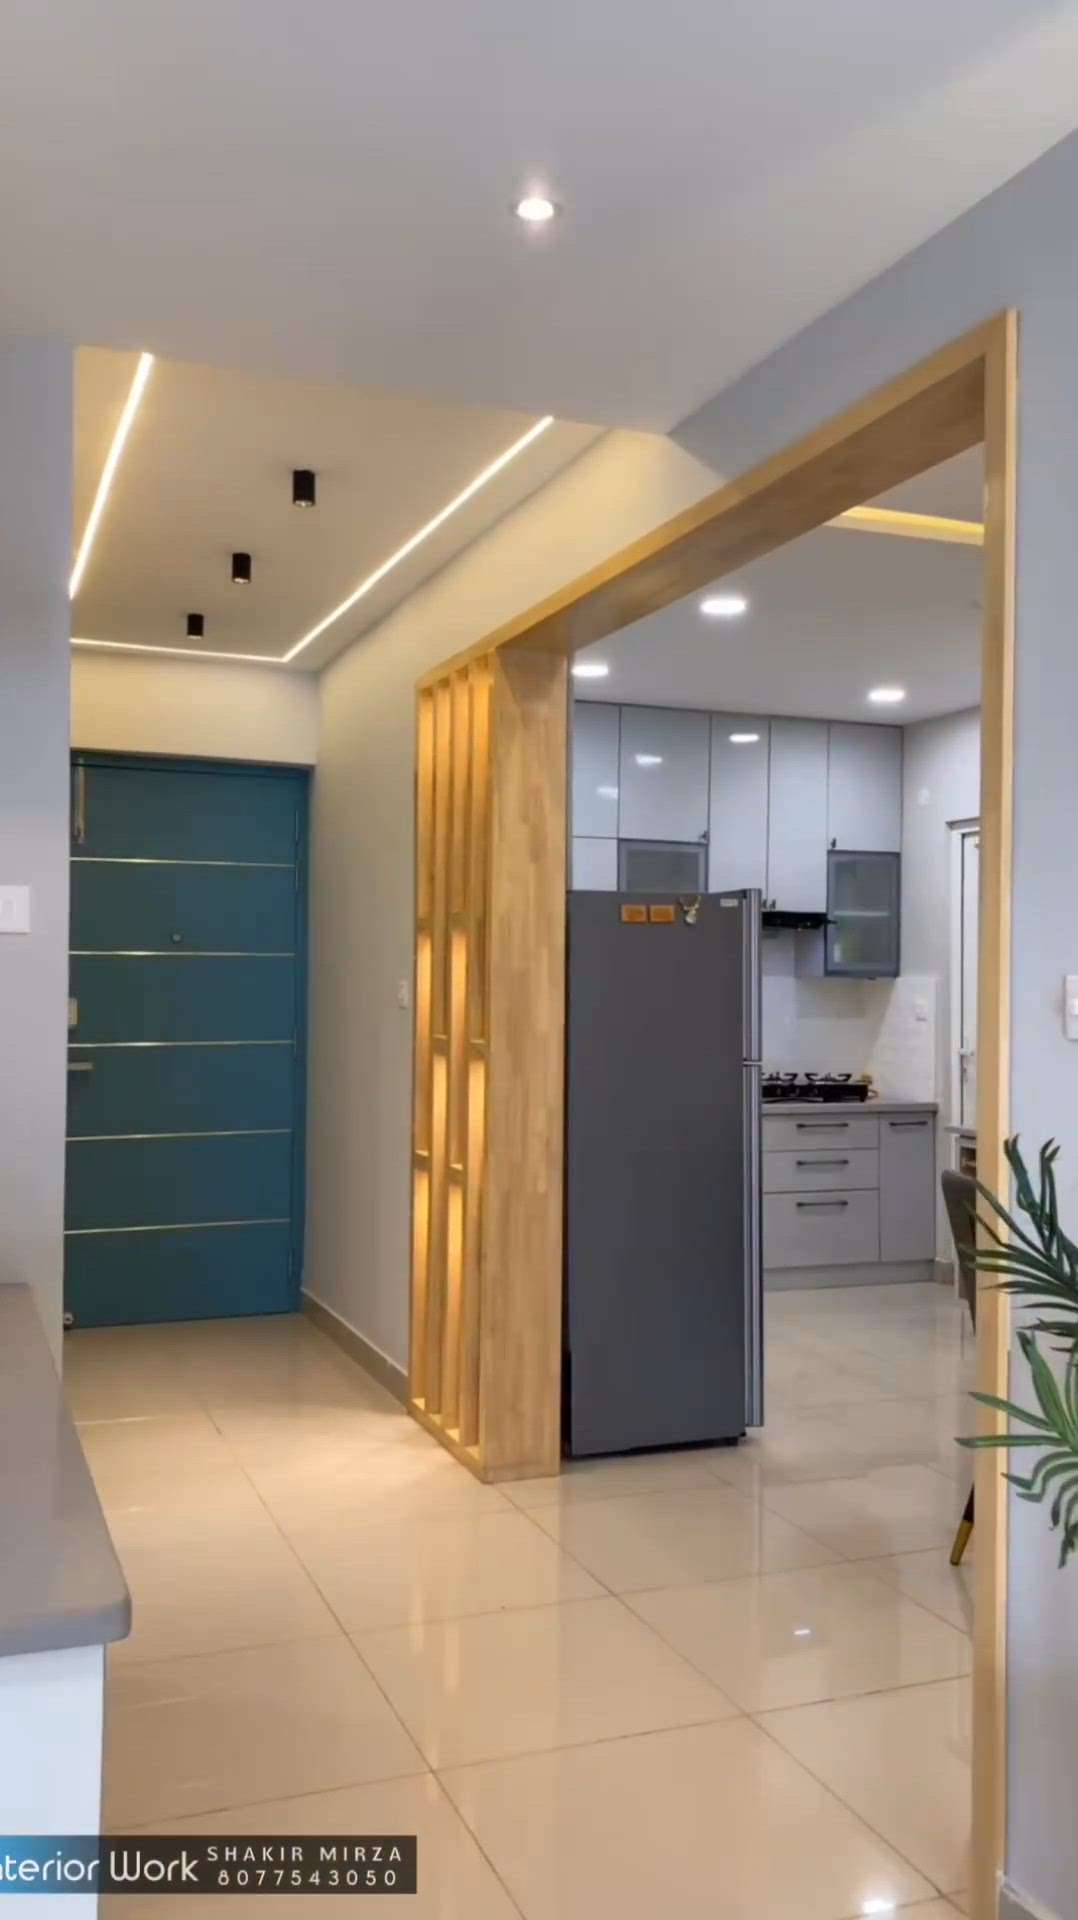 #cabinetdesign #storagecabinat #WoodenKitchen #ModularKitchen #kitchenpartition #hallpartition #tvunitinterior #MasterBedroom #KingsizeBedroom #BedroomDesigns #InteriorDesigne